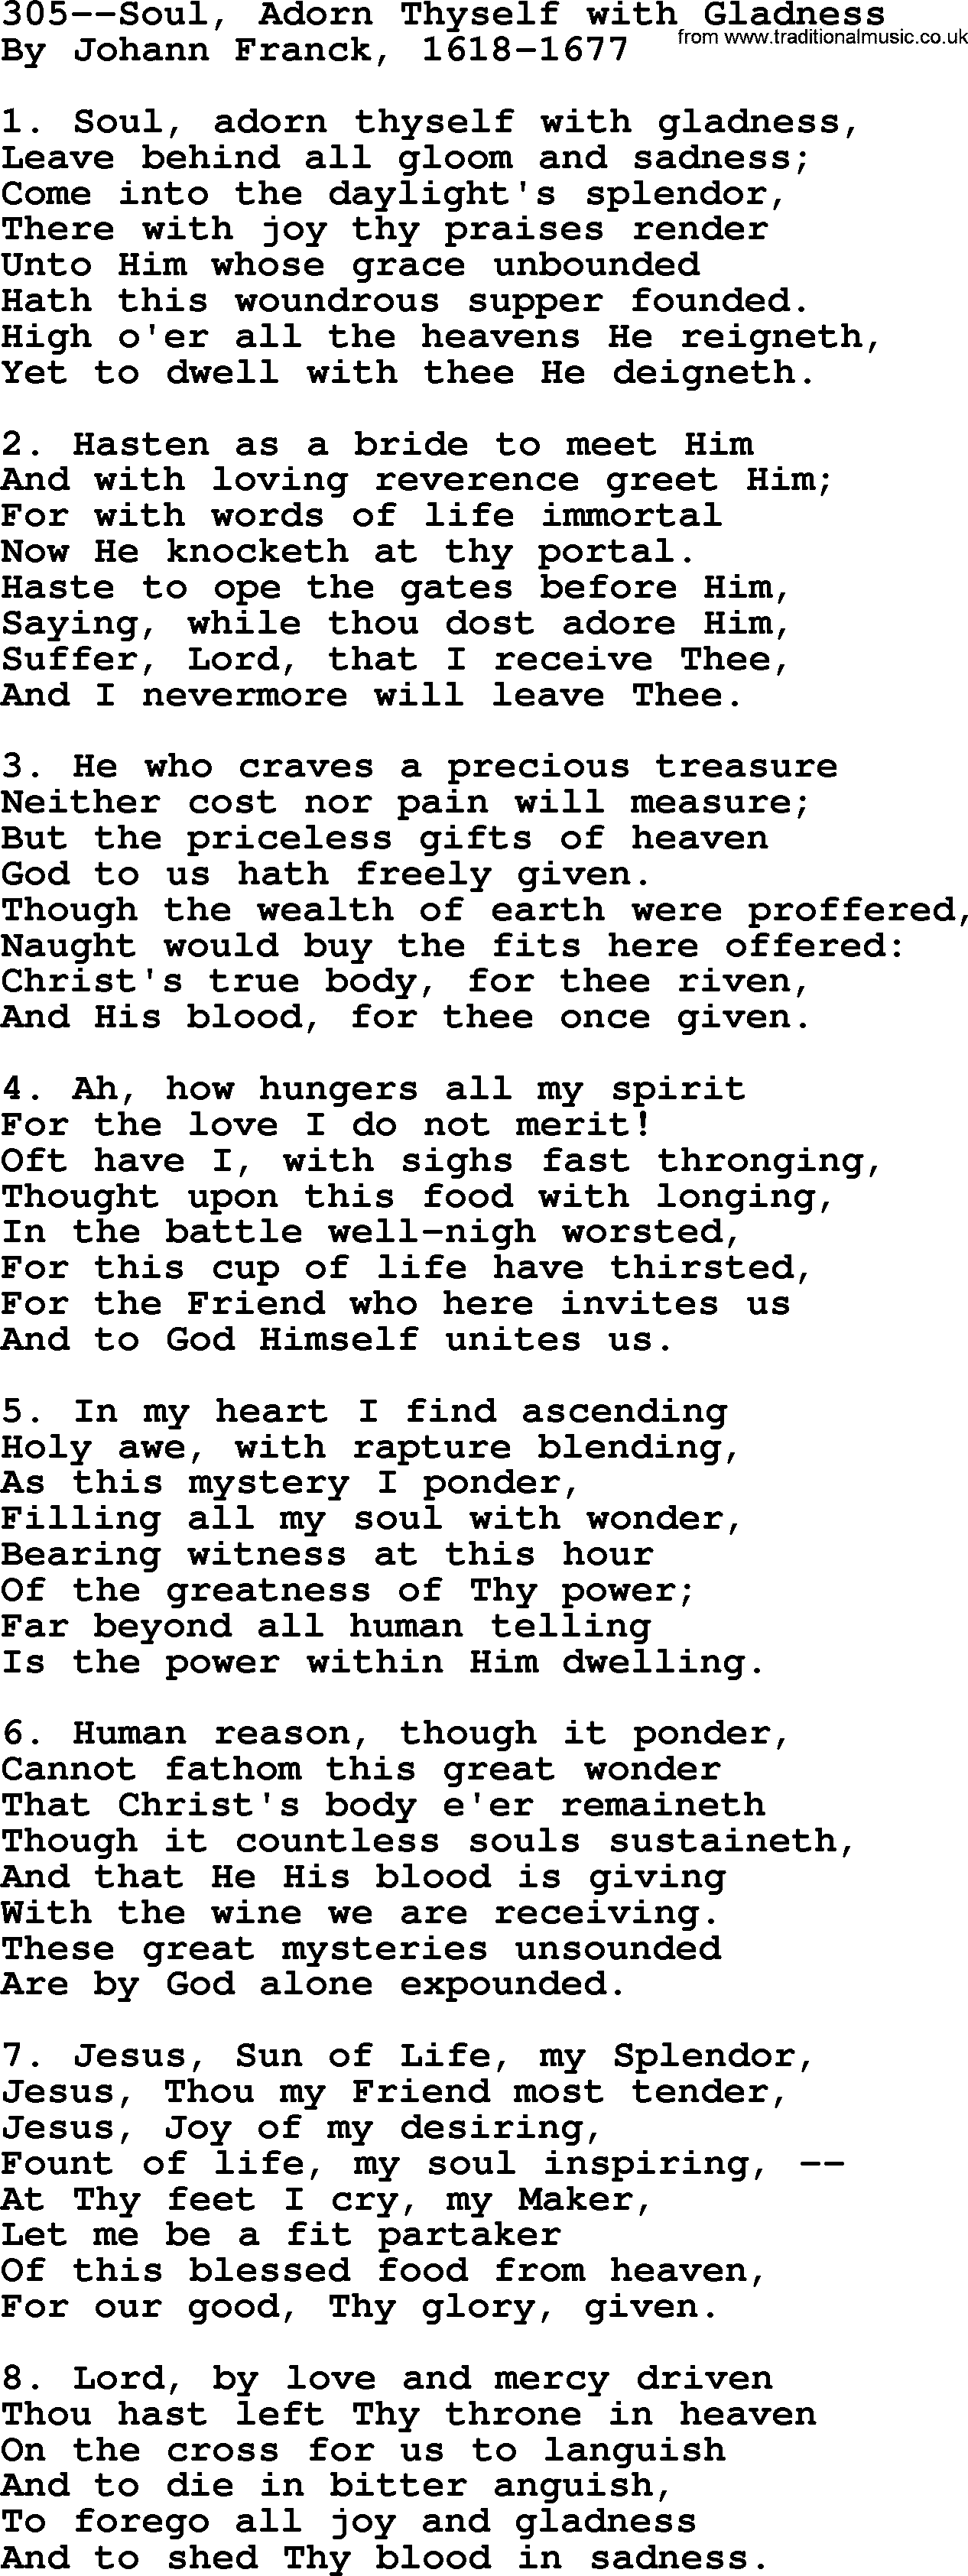 Lutheran Hymn: 305--Soul, Adorn Thyself with Gladness.txt lyrics with PDF